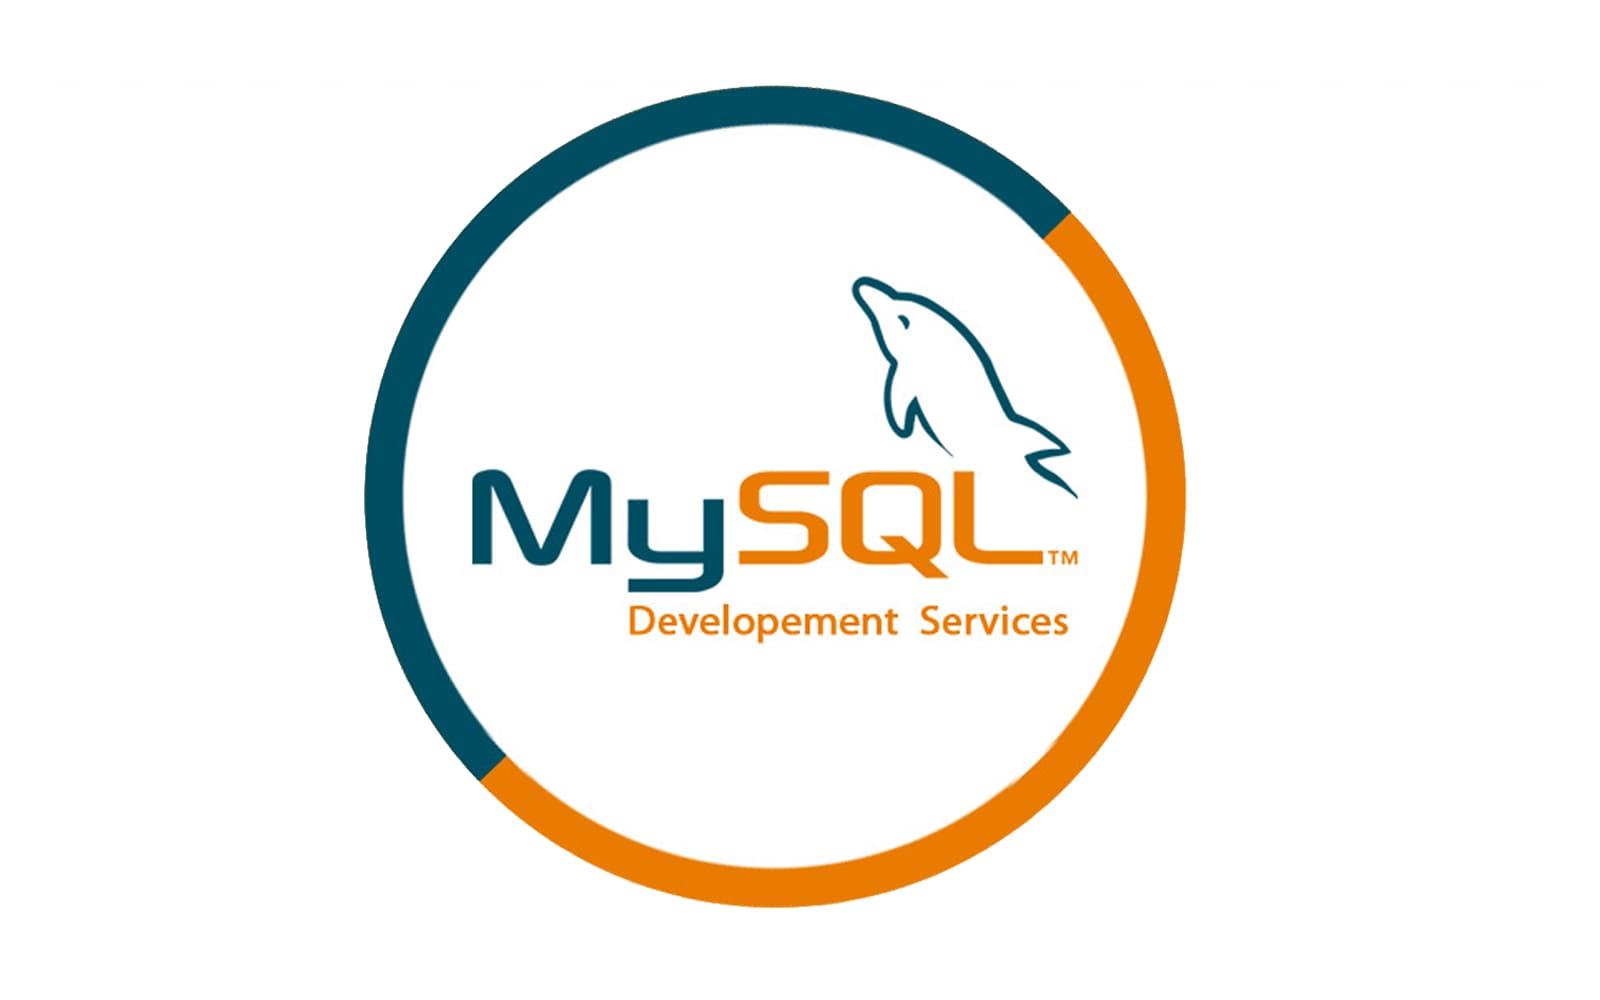 mysql logo transparent